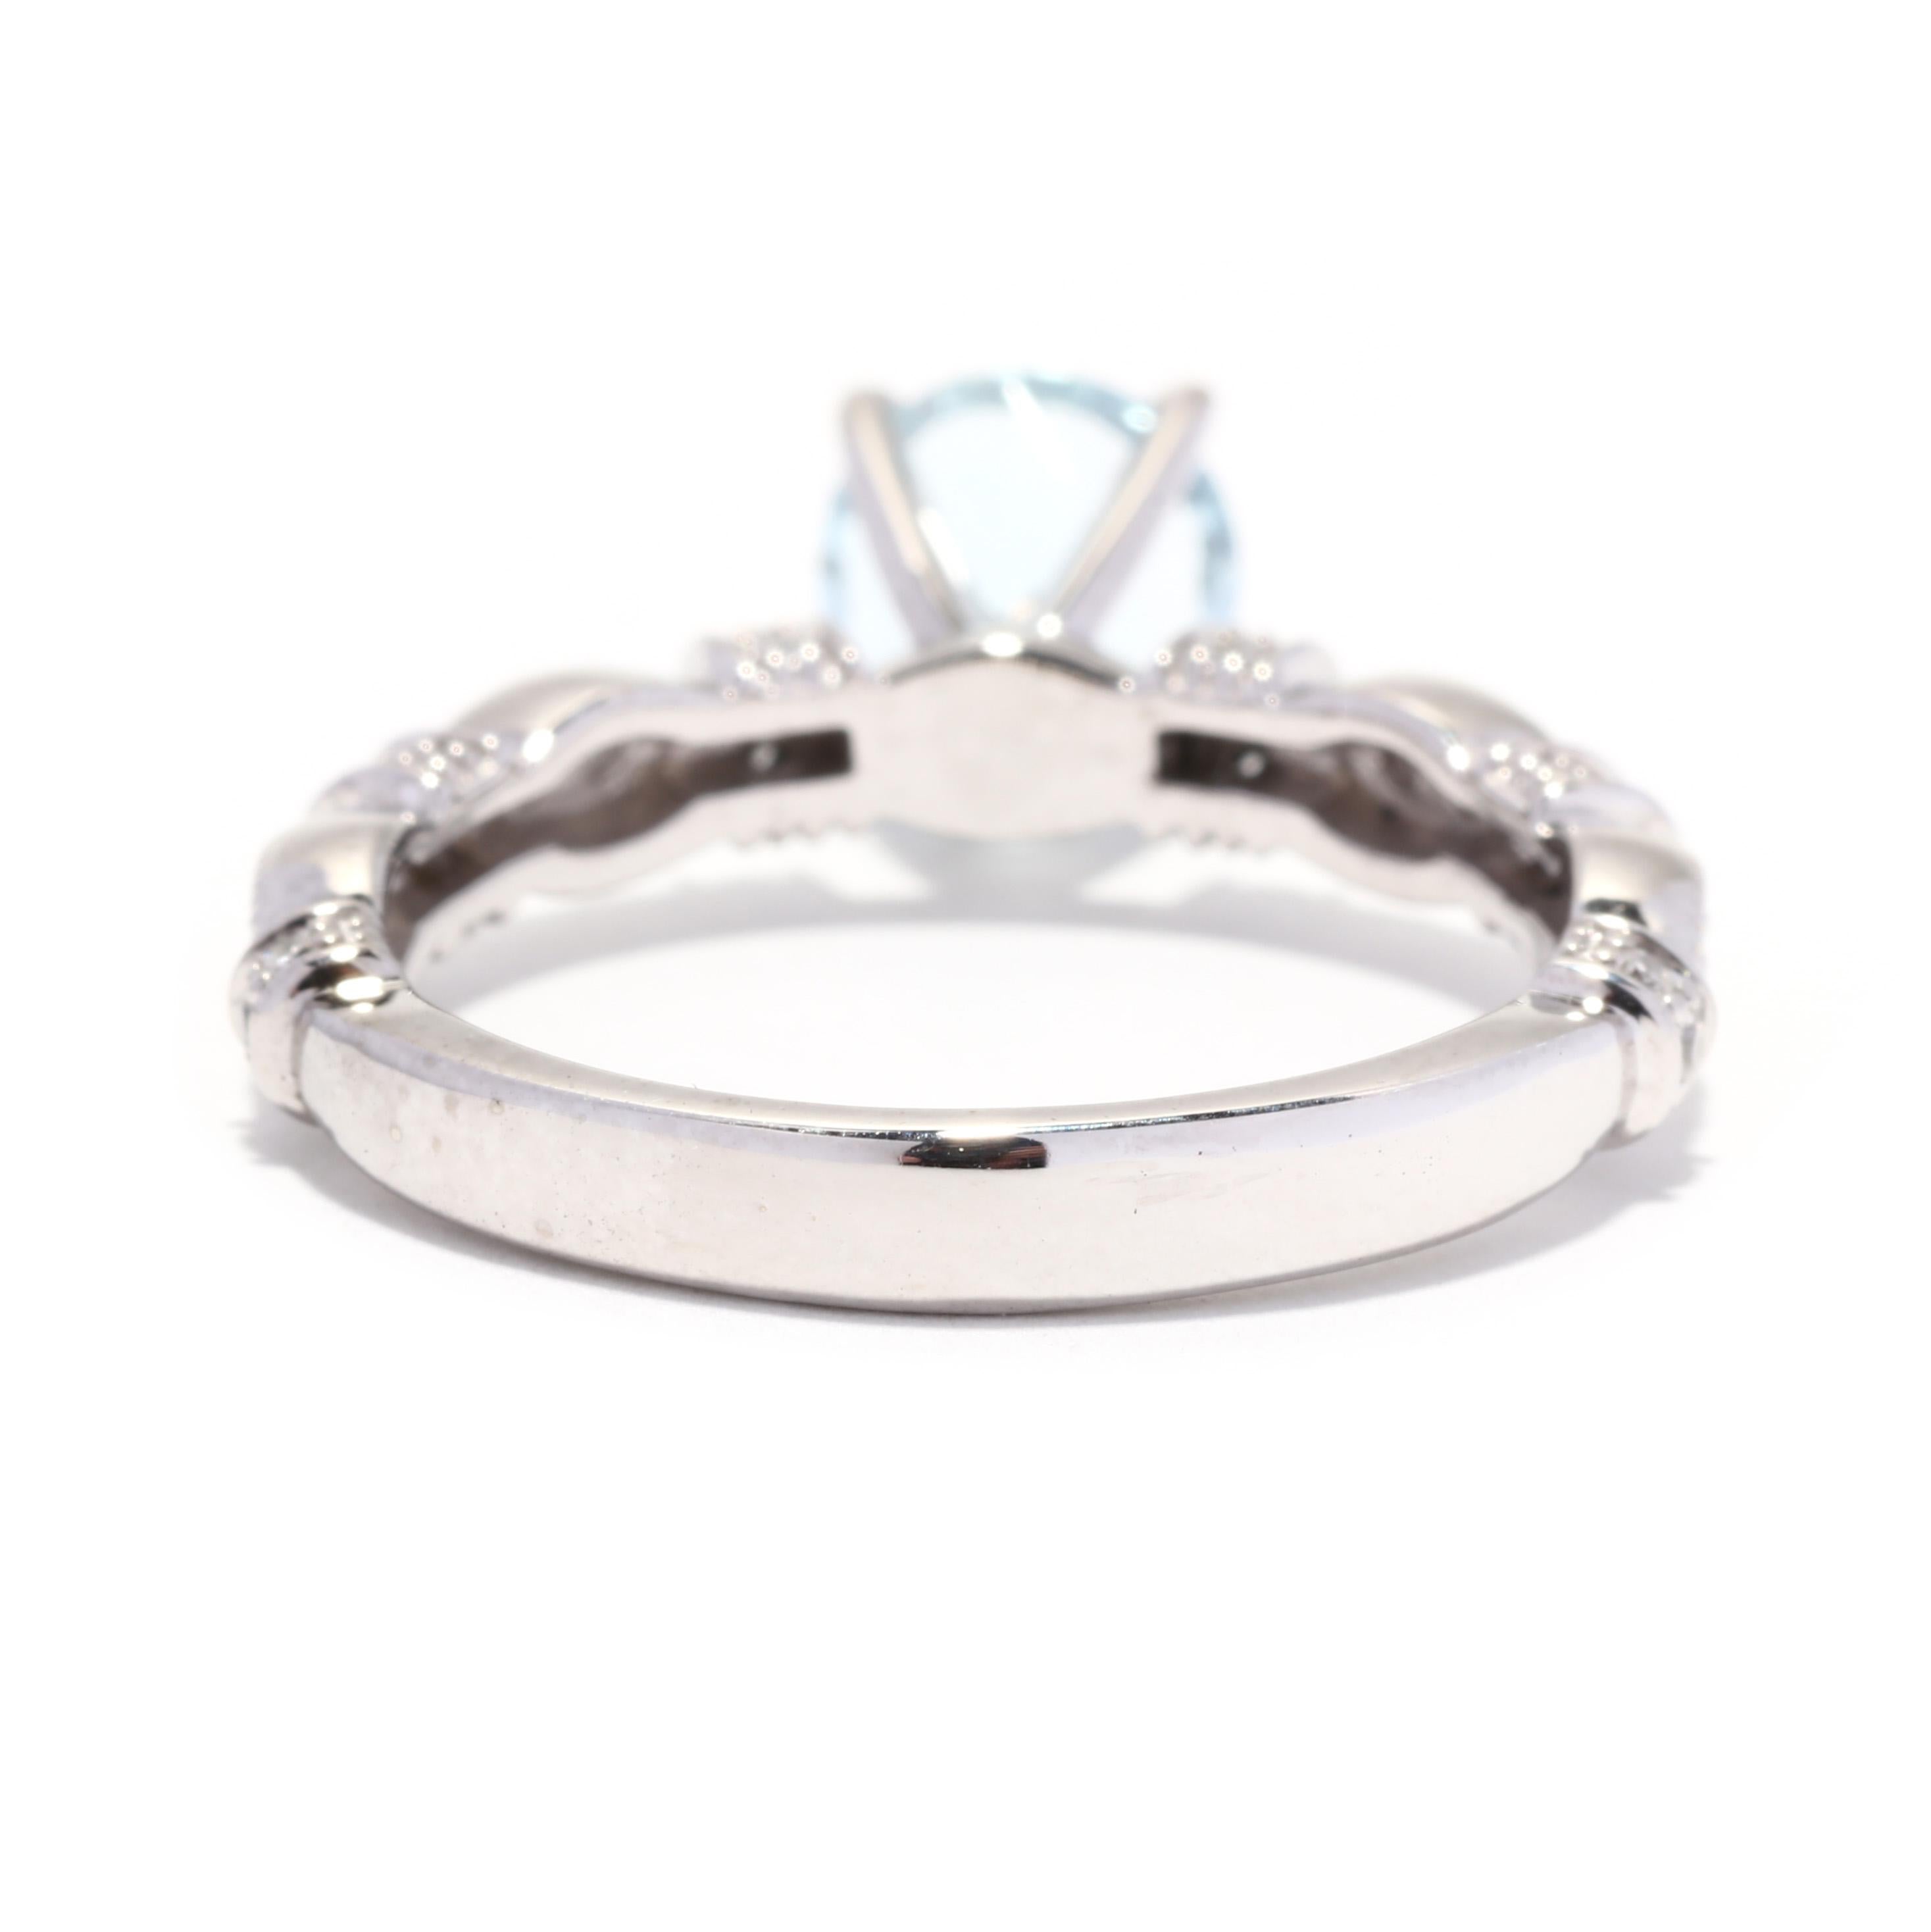 Round Cut Aquamarine Diamond Engagement Ring, 14K White Gold, Ring Size 7.25